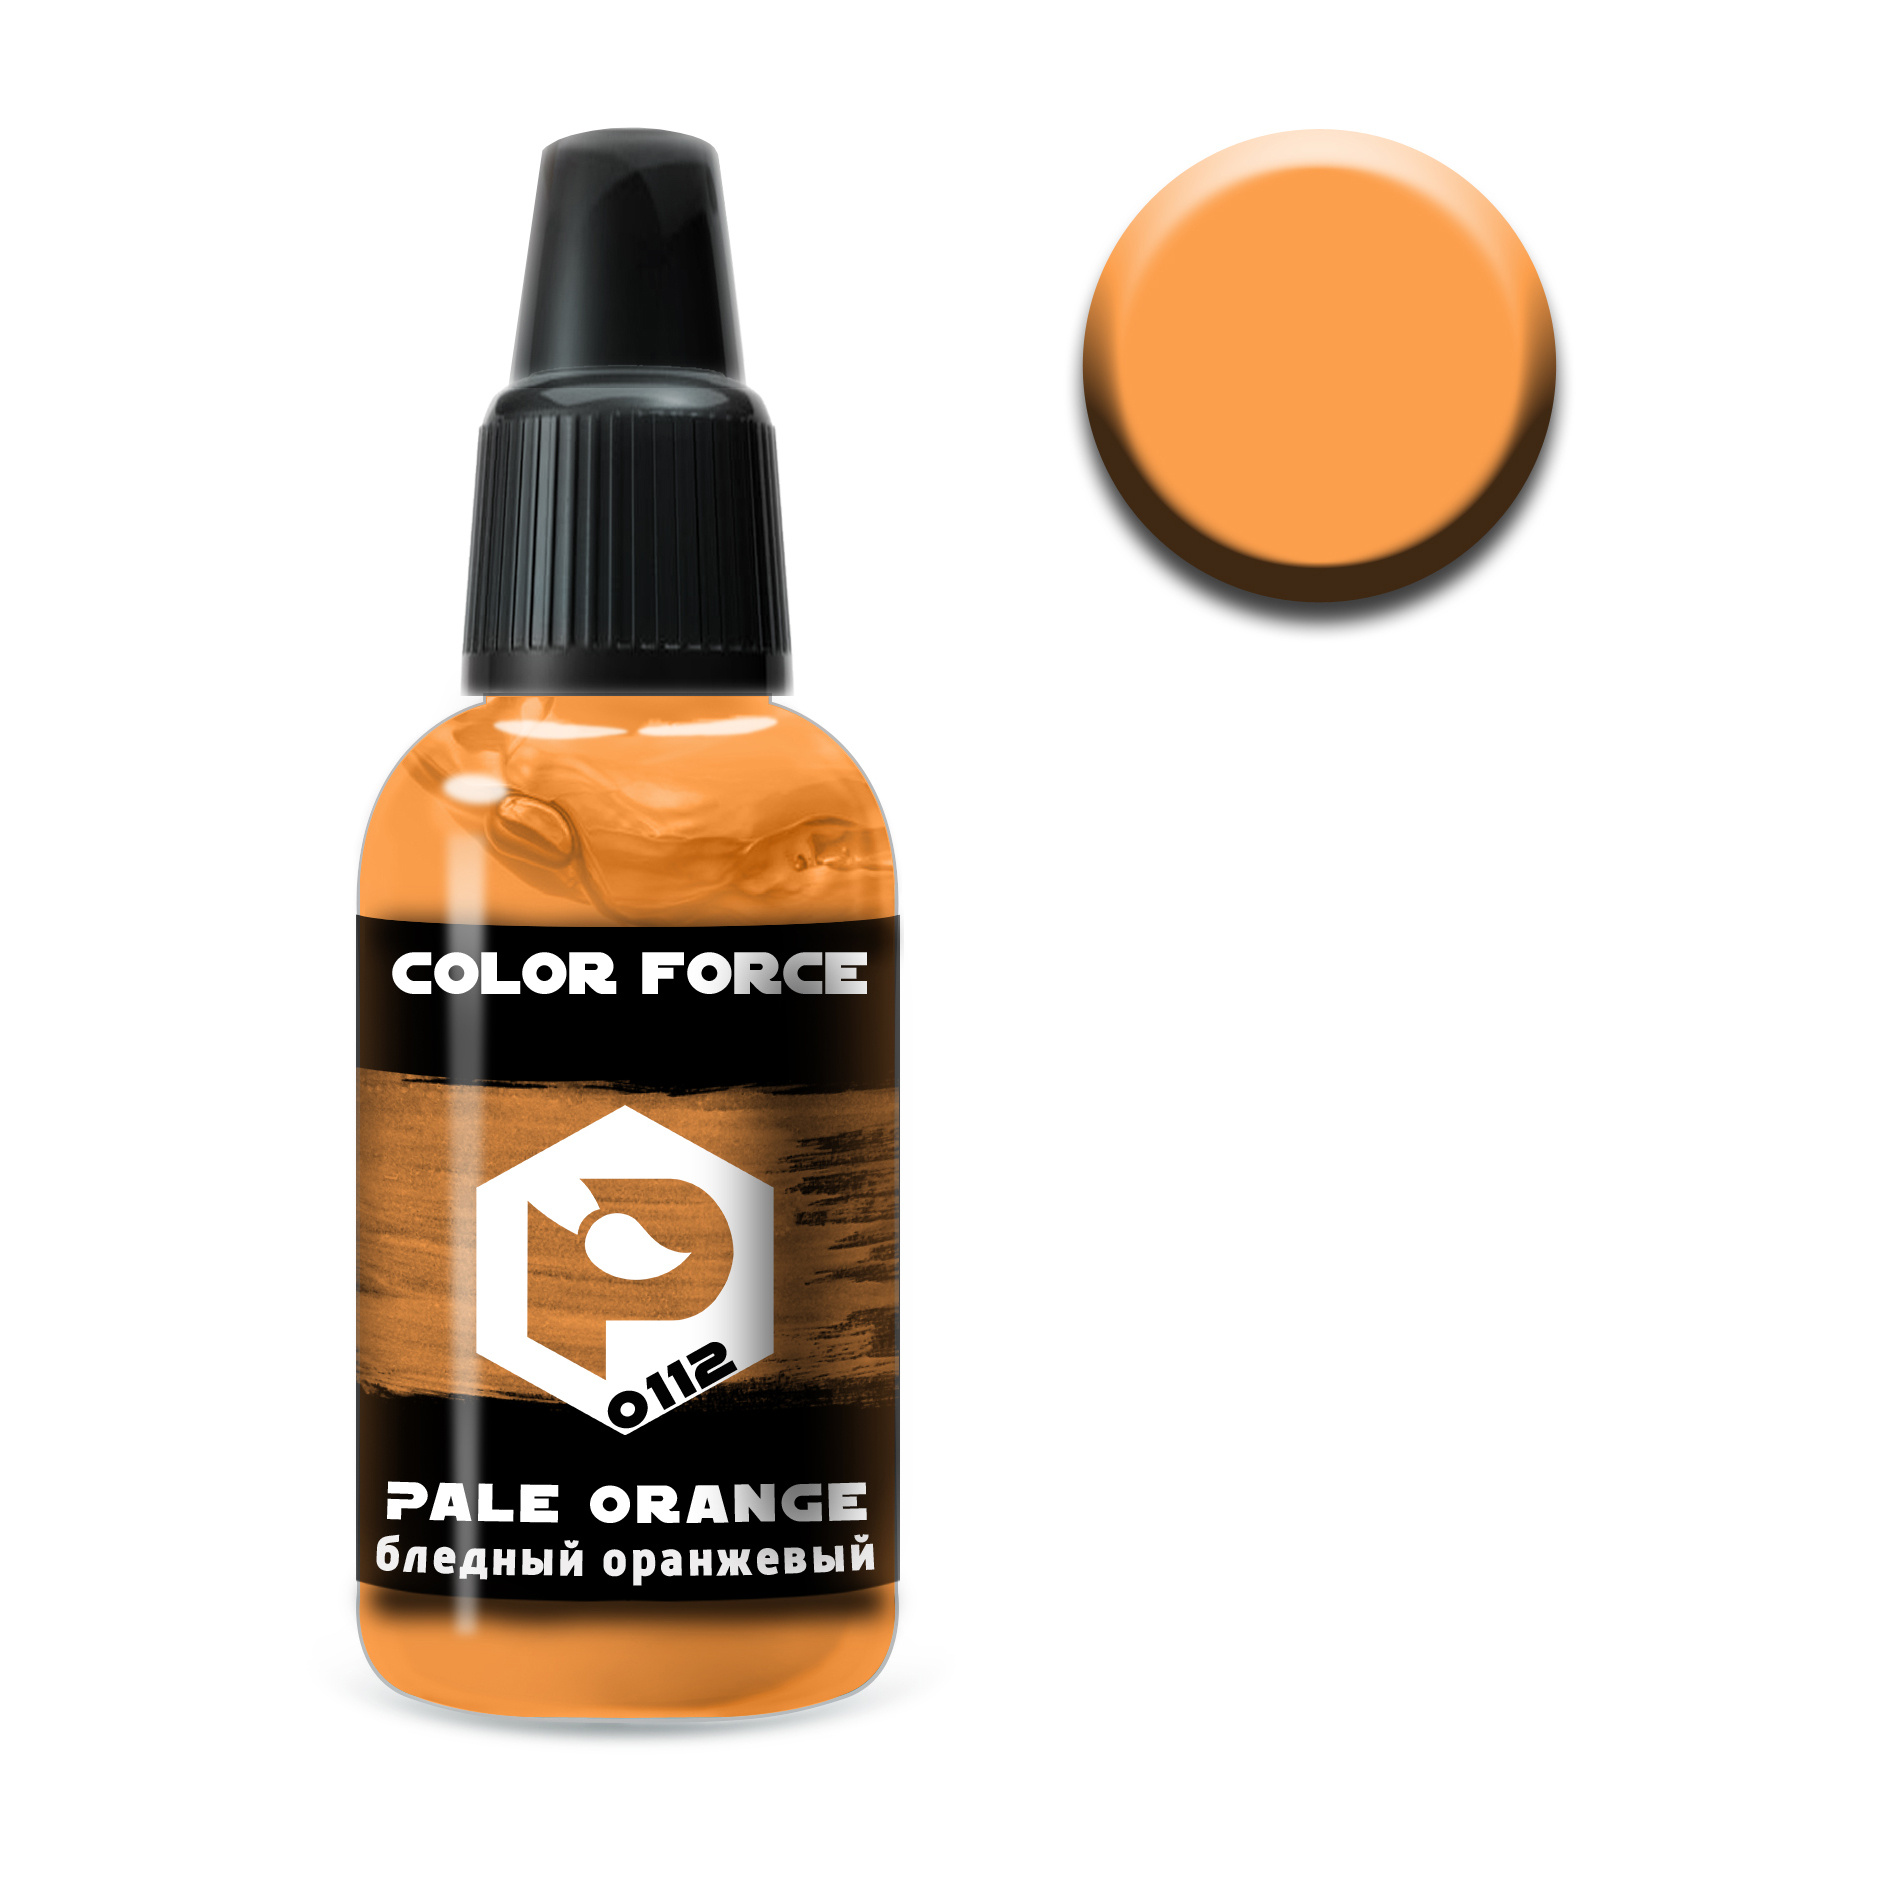 art.0112 Pacific88 airbrush Paint Pale orange (Pale orange)